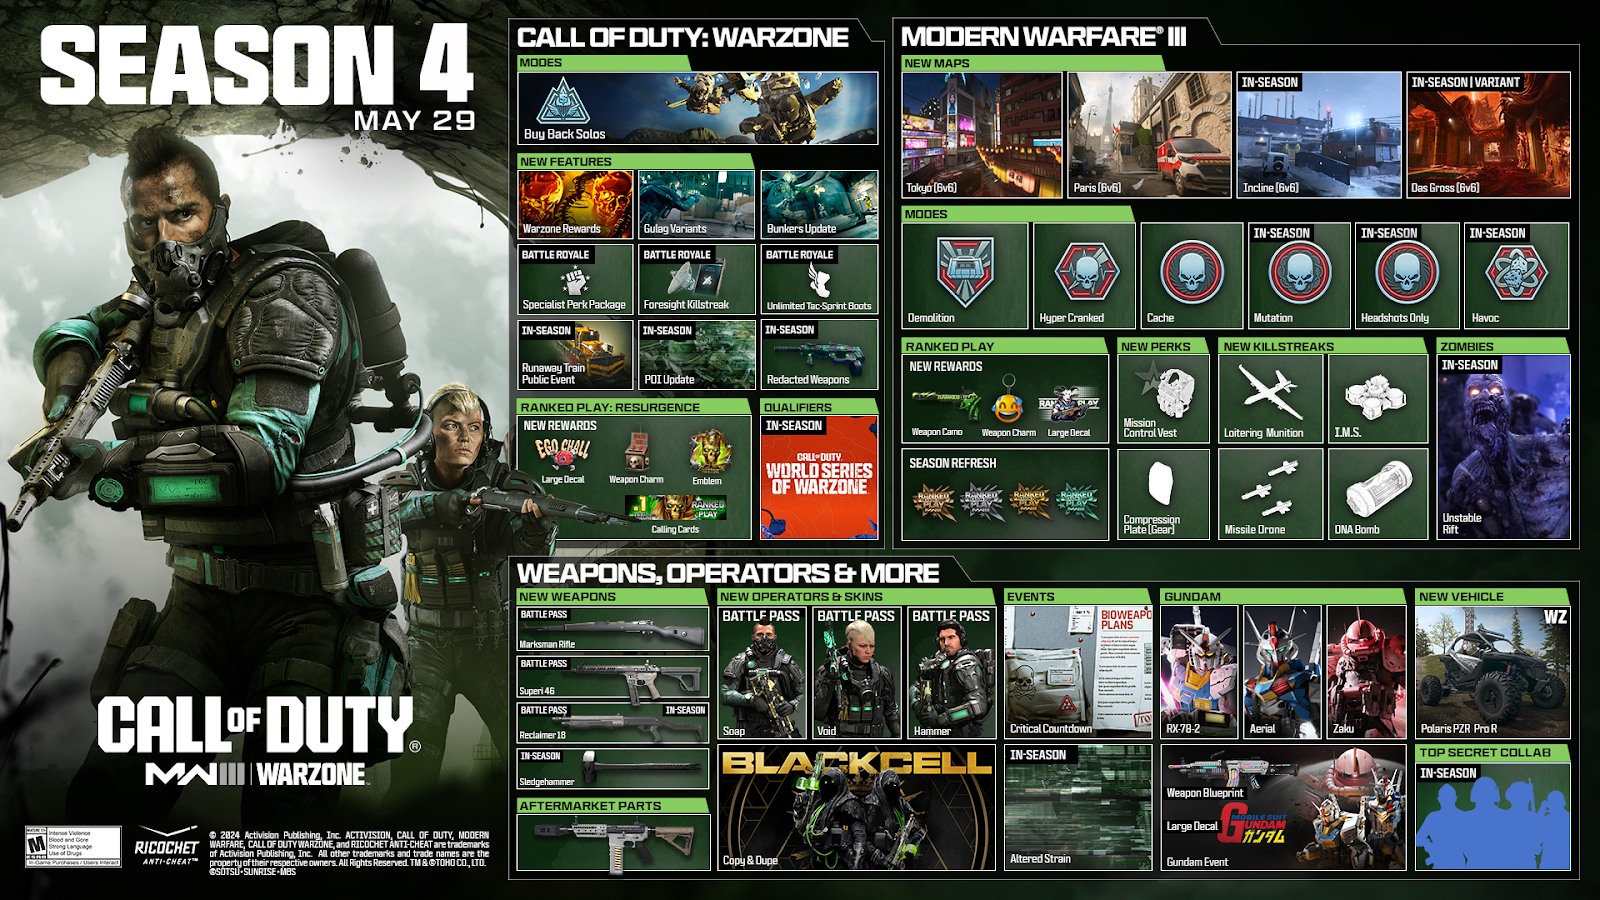 Jogos: Call of Duty: MW III, Warzone e Warzone Mobile anunciam a 4ª temporada